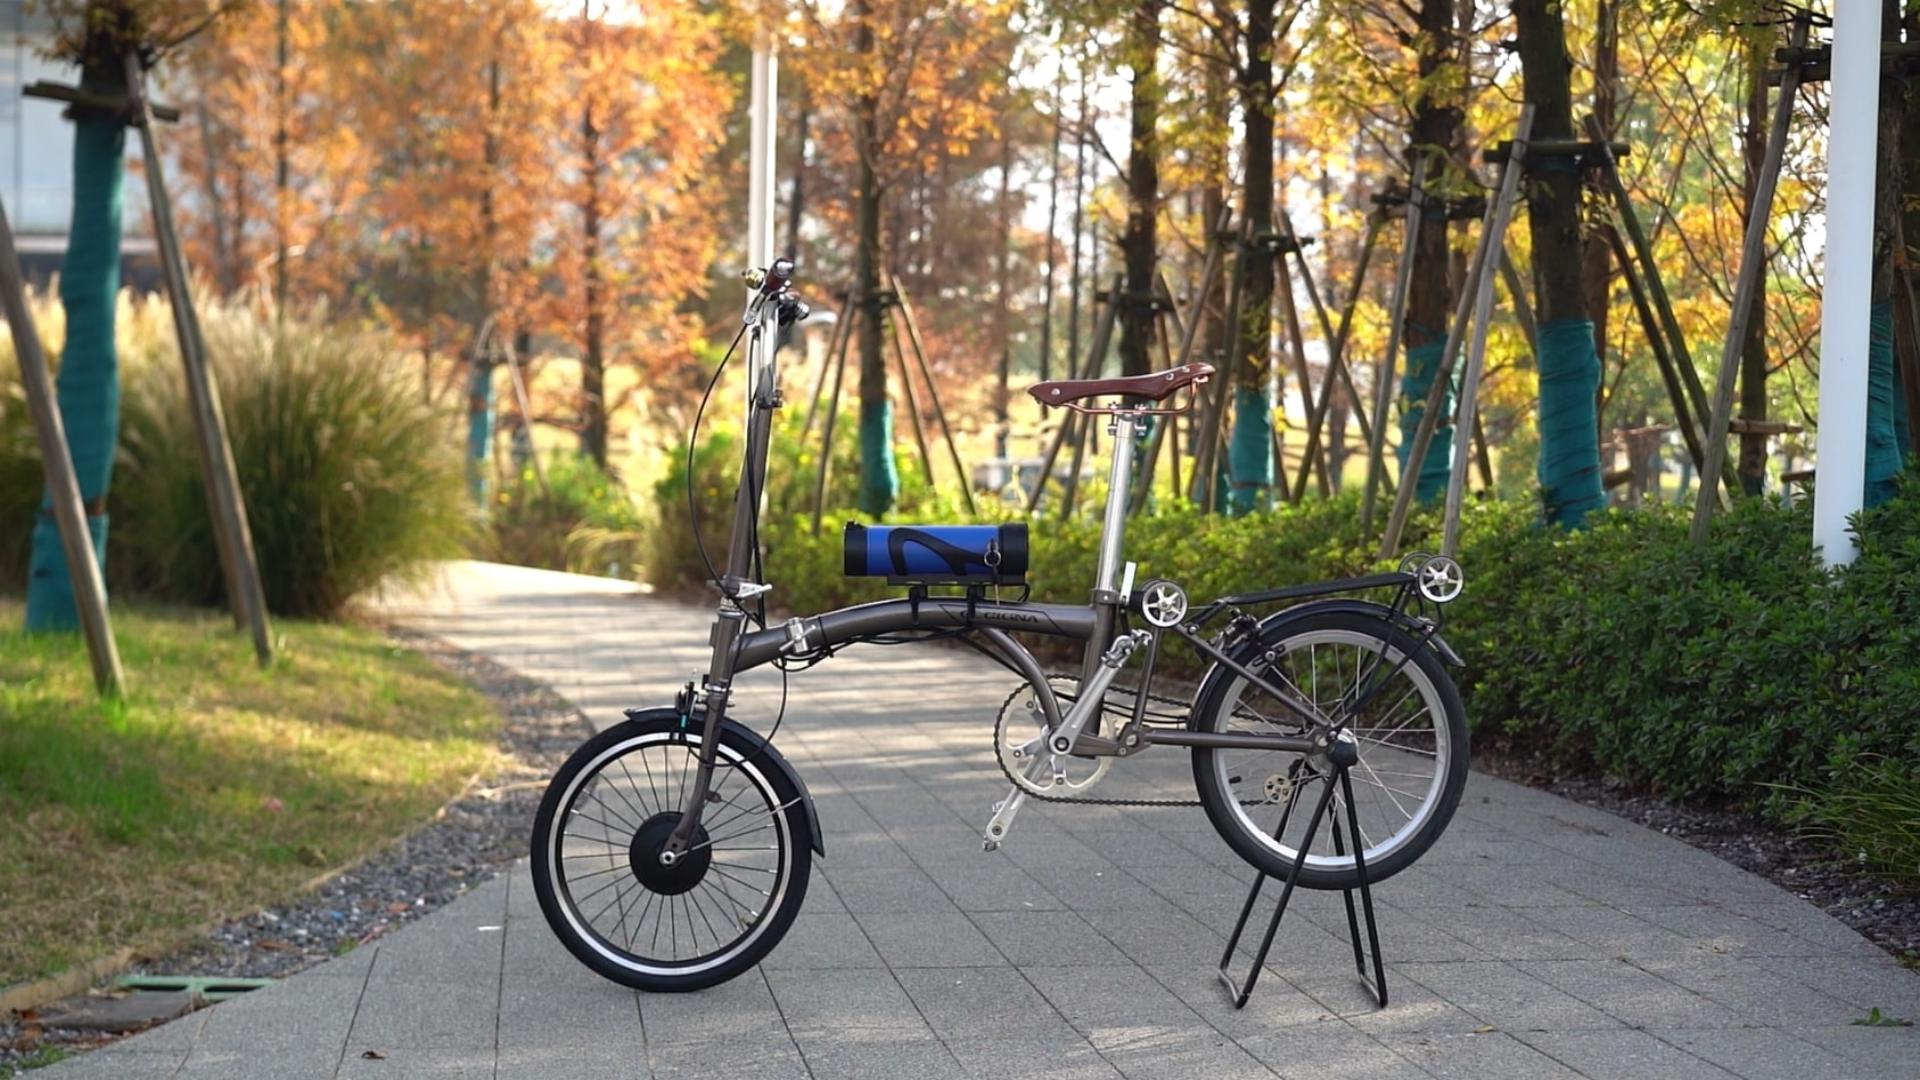 KN new design water bottle battery ebike kit / Fashionable bike conversion kit with Brushless Gear Hub Motor